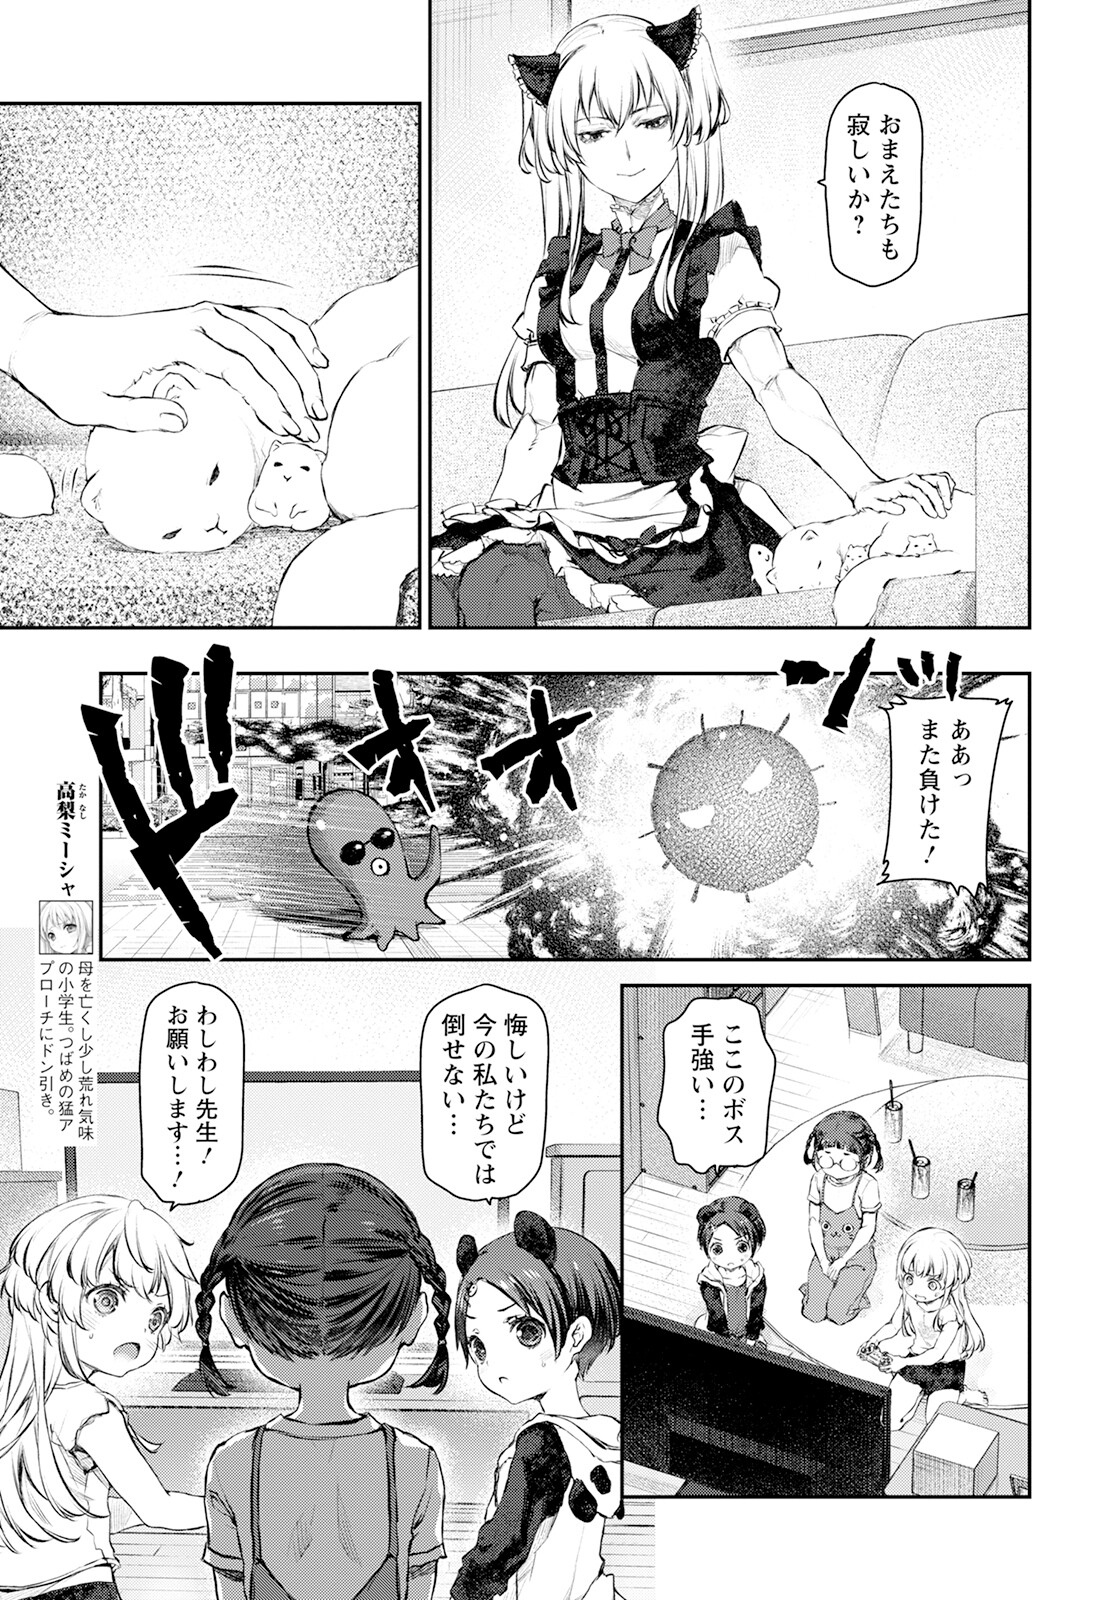 Uchi no Maid ga Uzasugiru! - Chapter 55 - Page 3